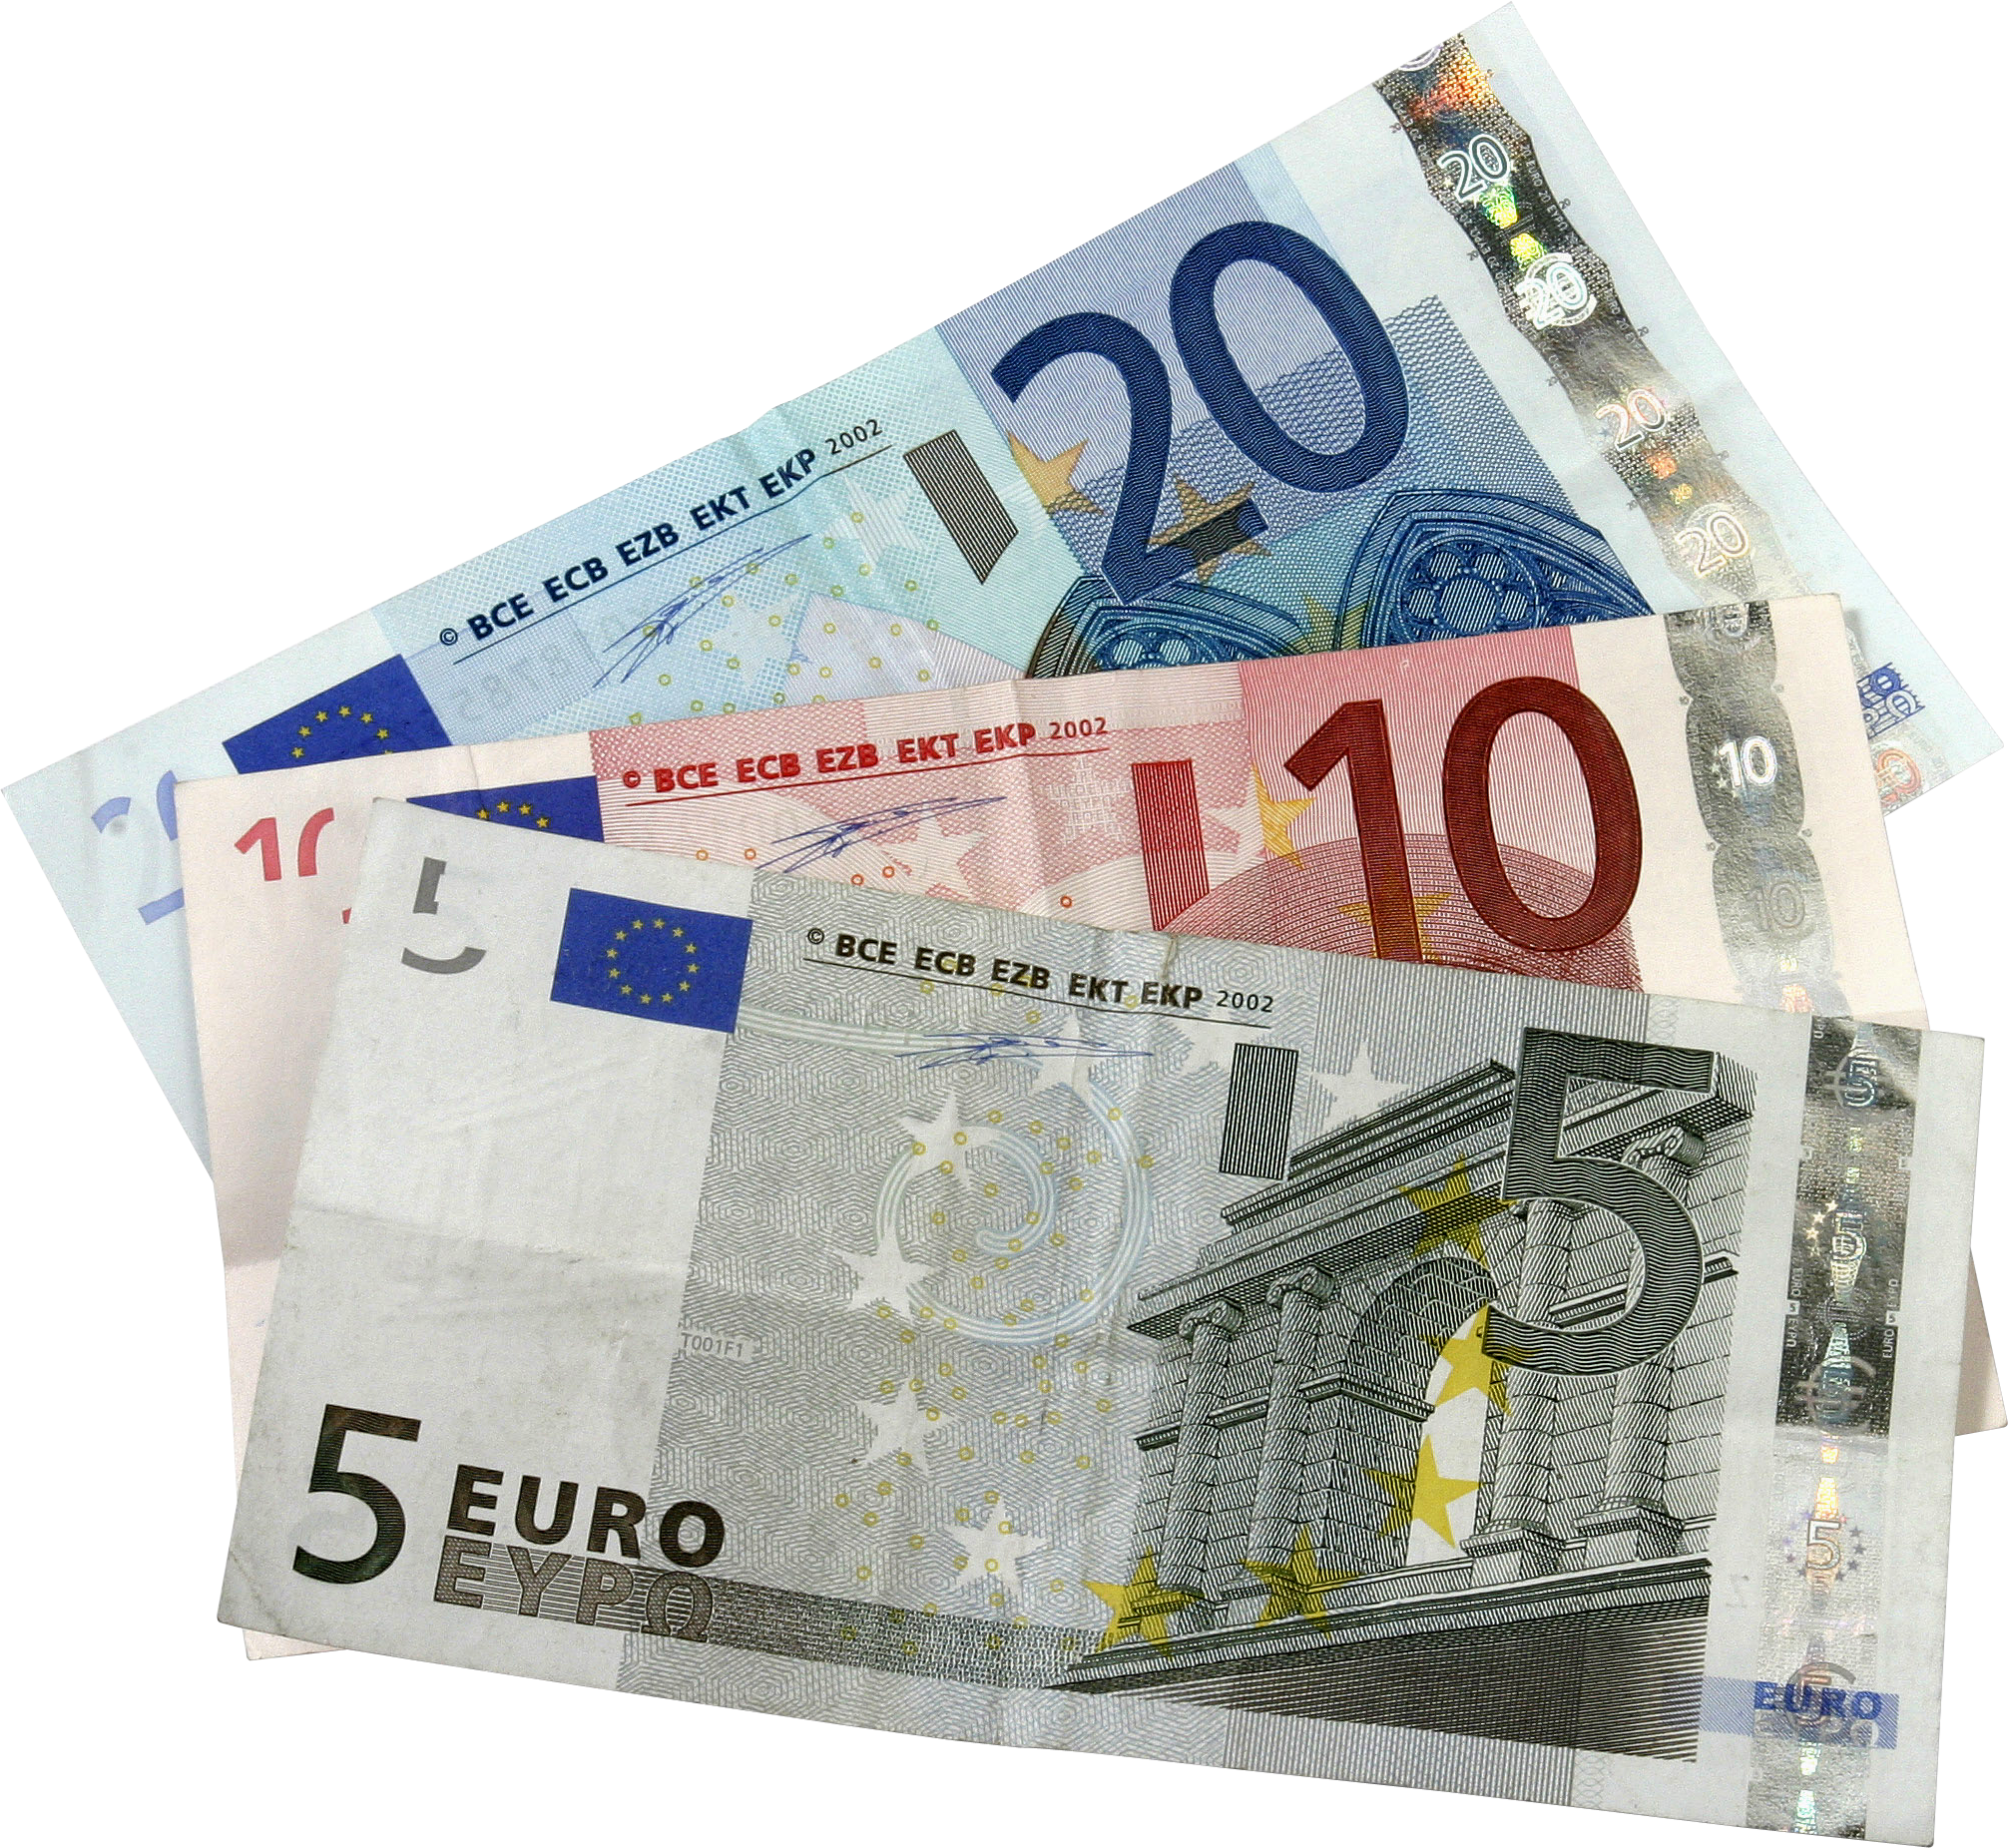 Euro currency. Деньги евро. Евро валюта. Евро на белом фоне. Денежные купюры евро.